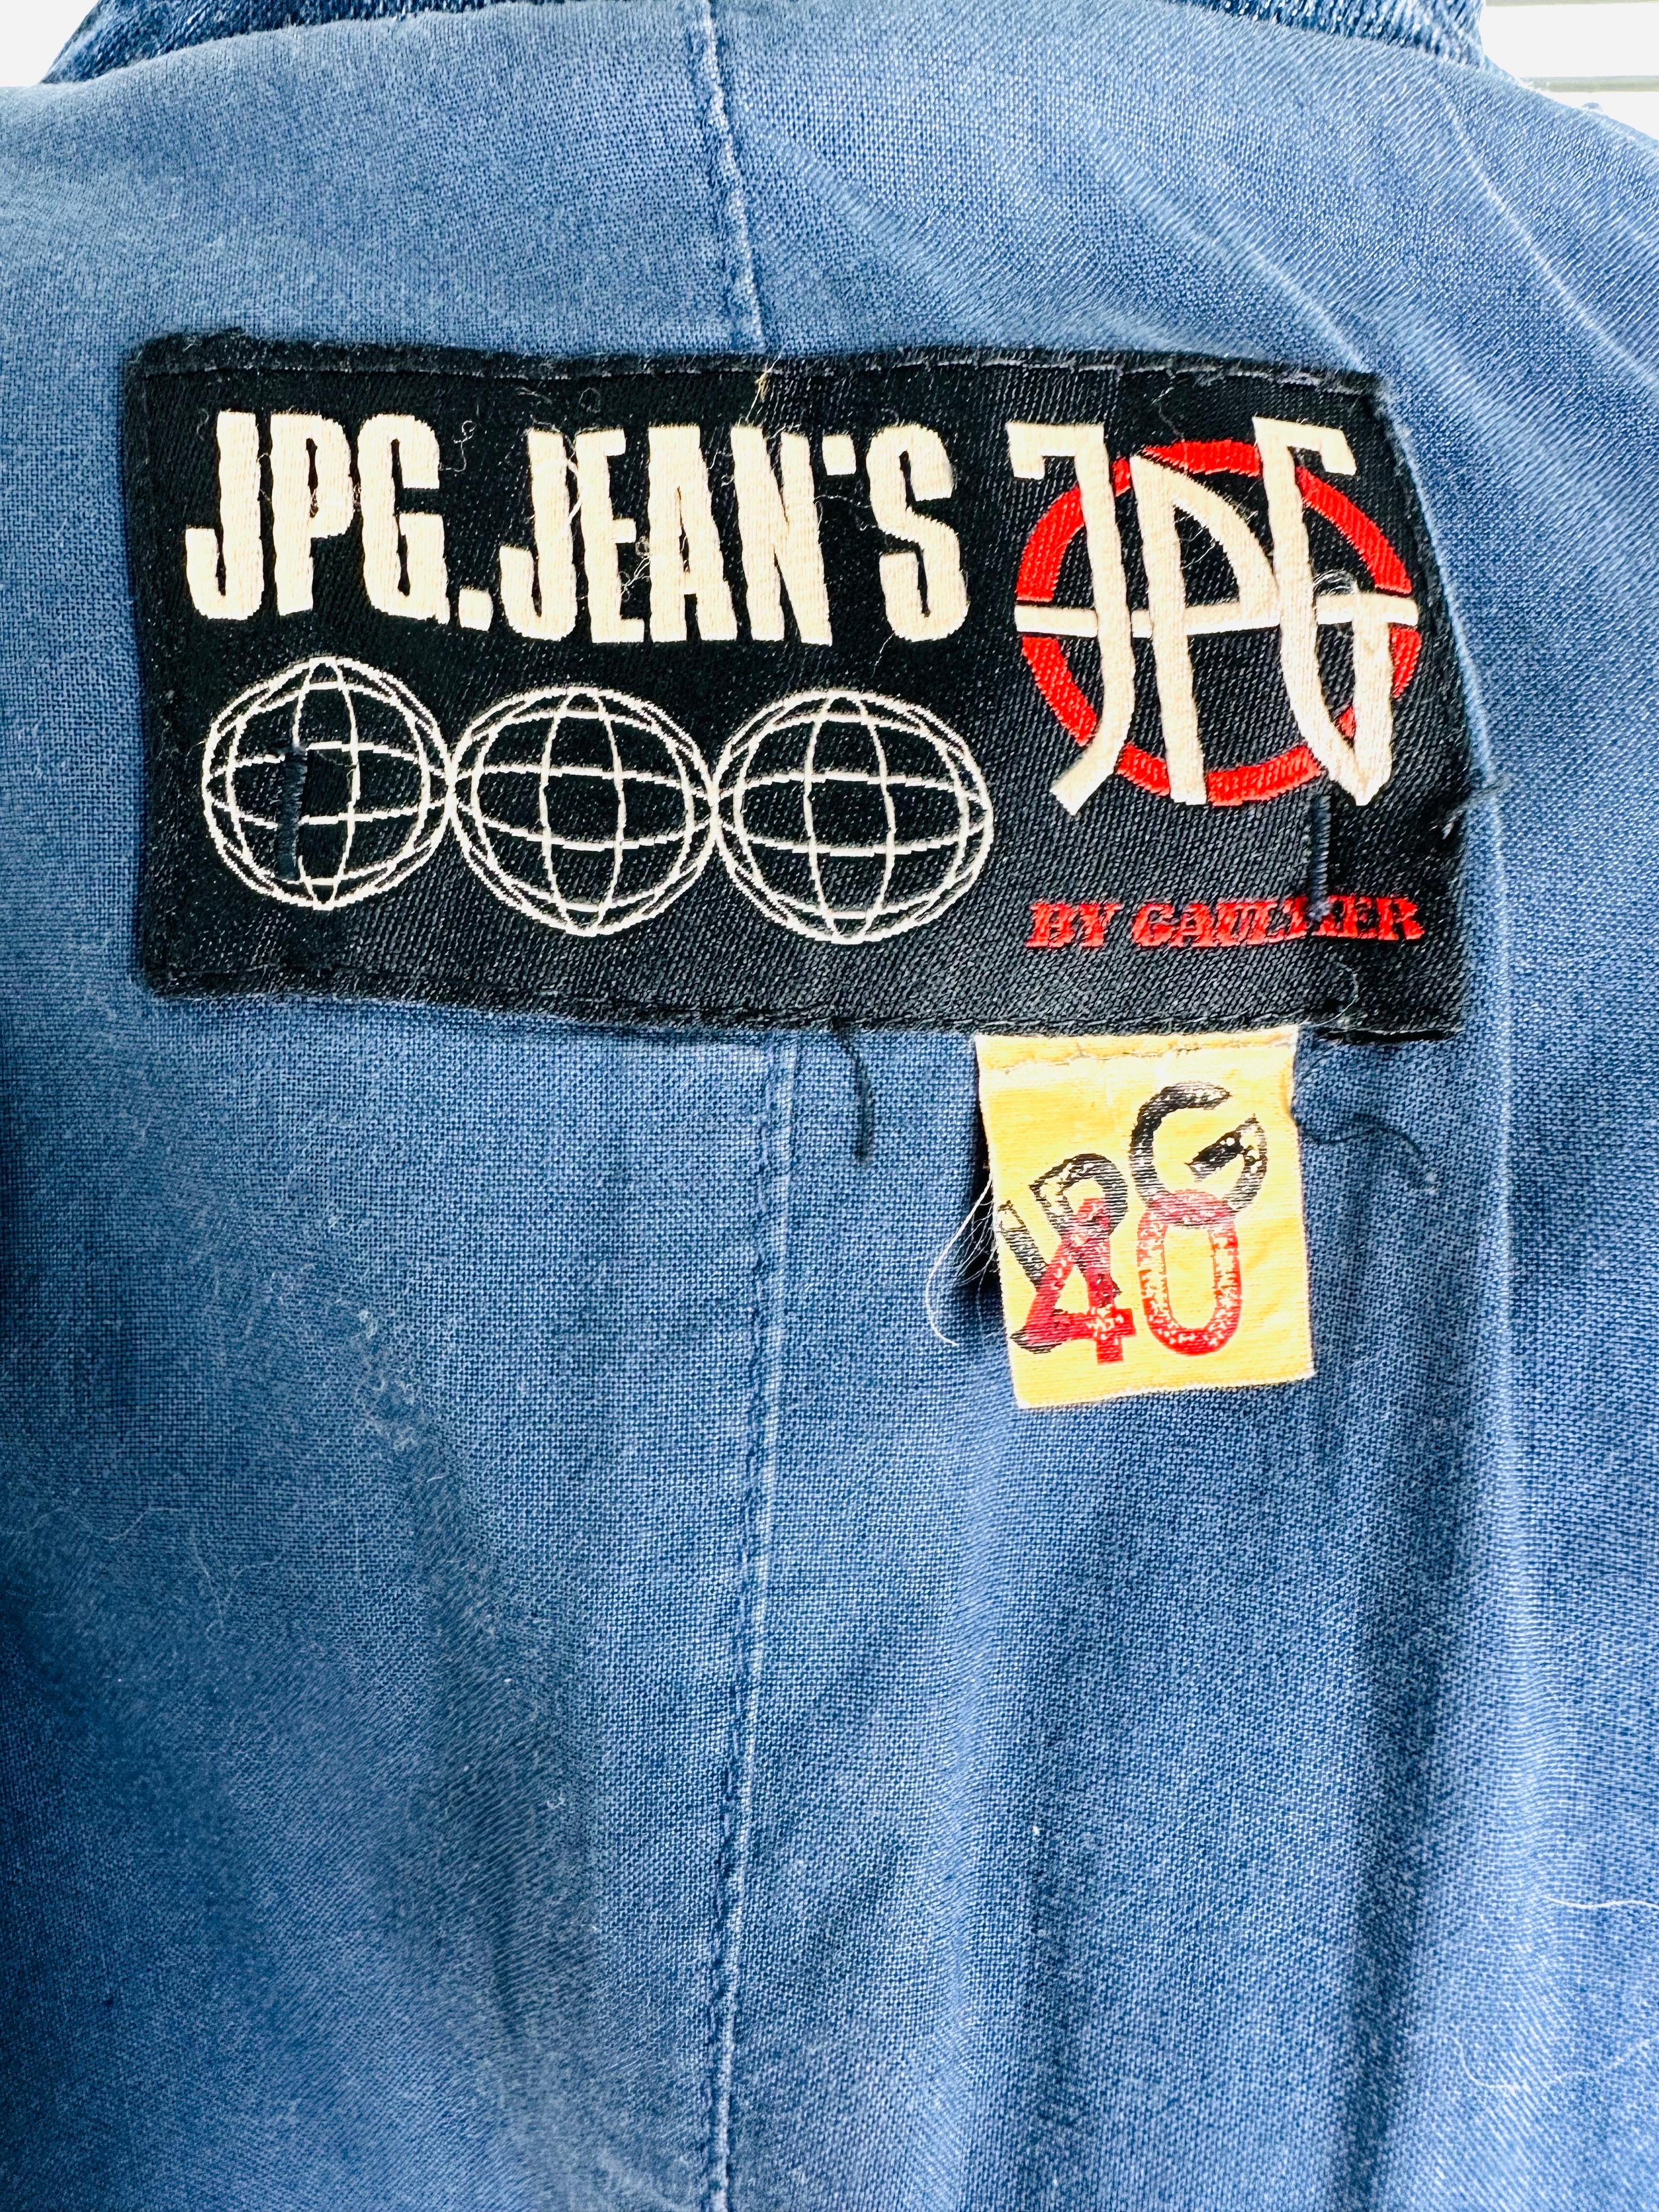 Jean Paul Gaultier vintage jeans tails jacket For Sale 7